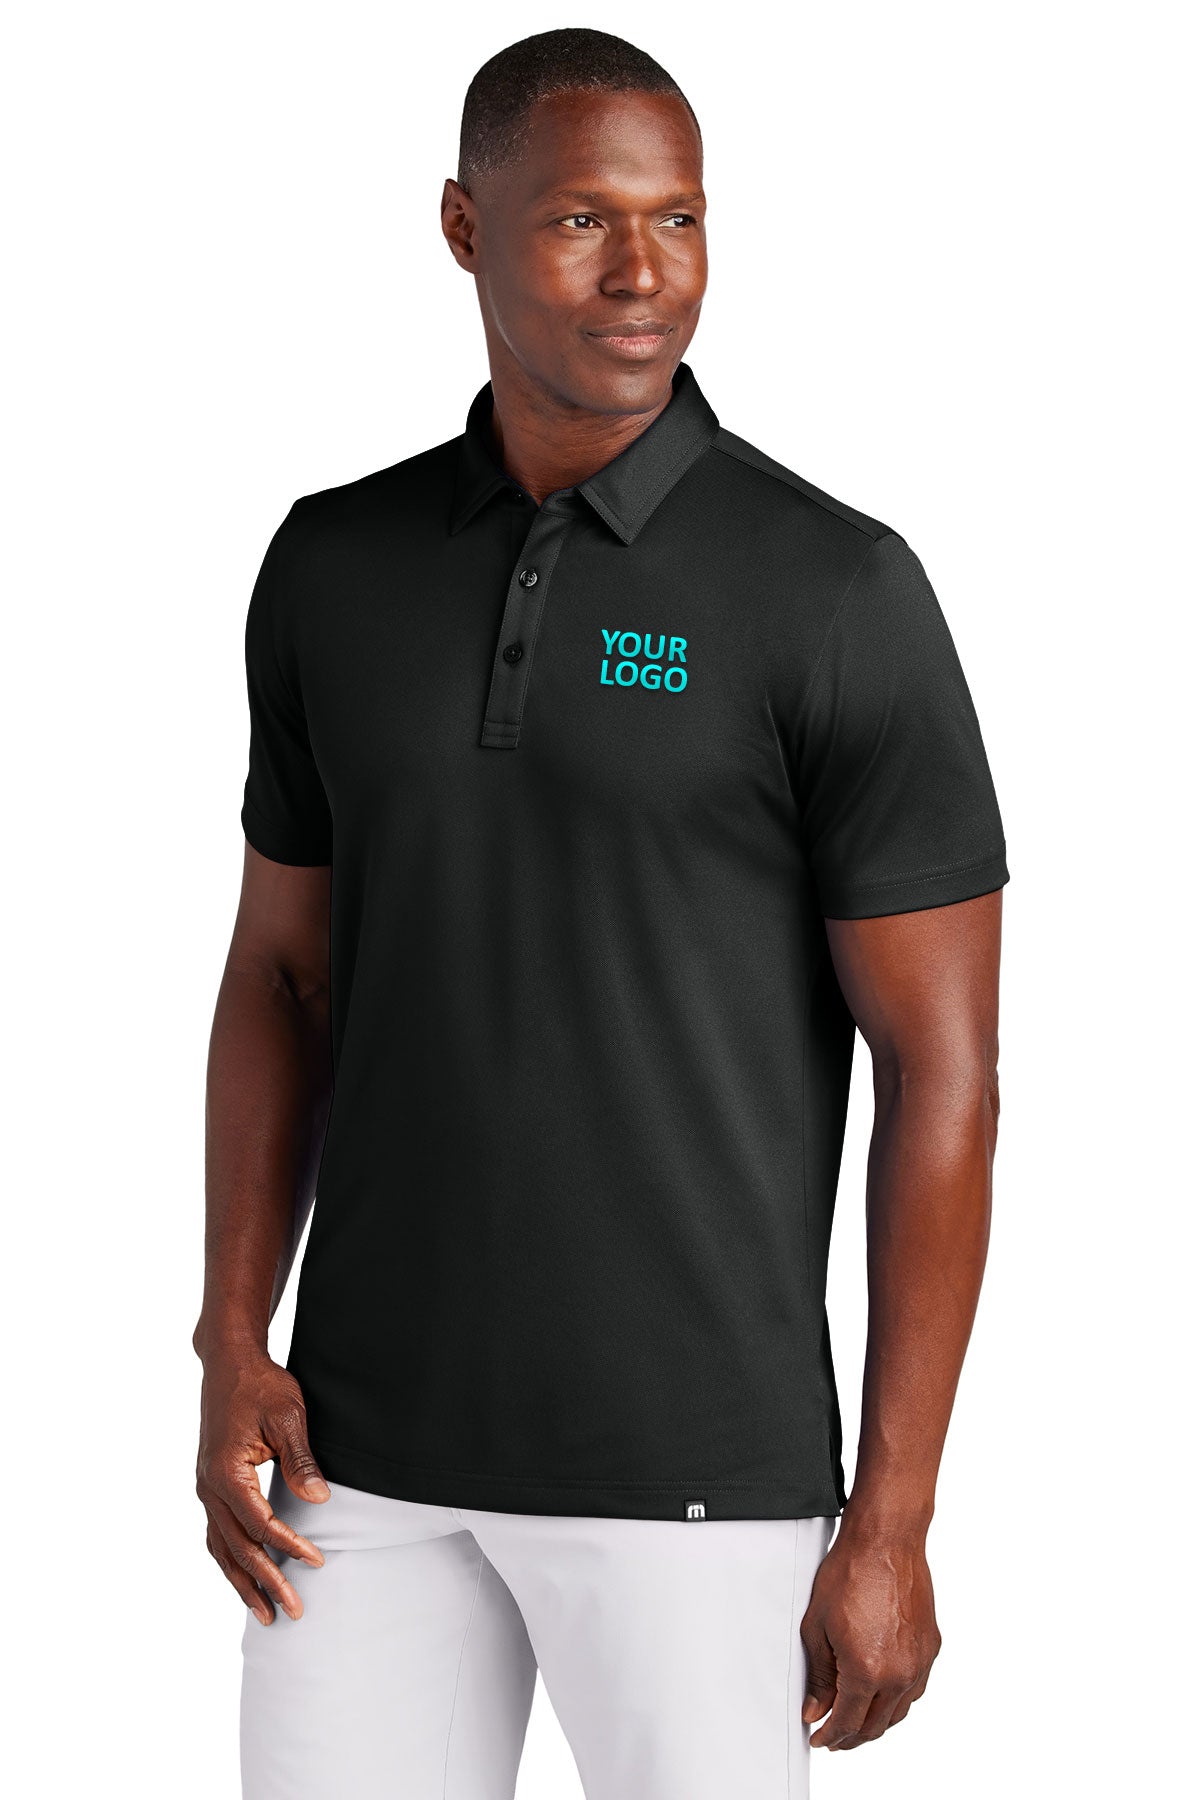 TravisMathew Black TM1MAA370 custom embroidered polo shirts